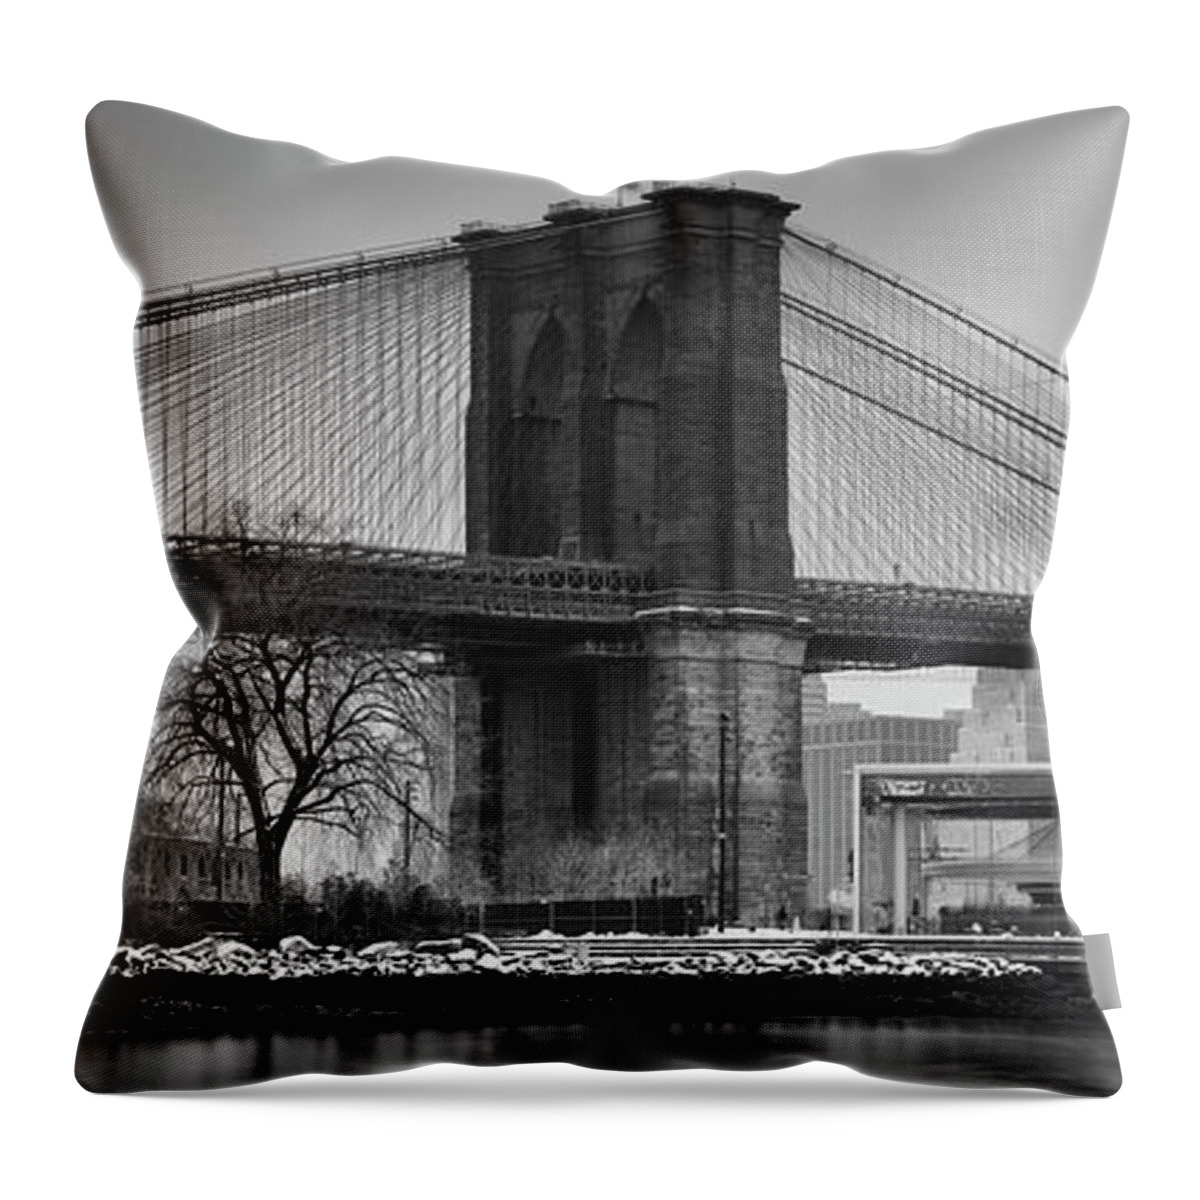 Brooklyn Bridge Throw Pillow featuring the photograph Brooklyn Bridge from Dumbo by Randy Lemoine